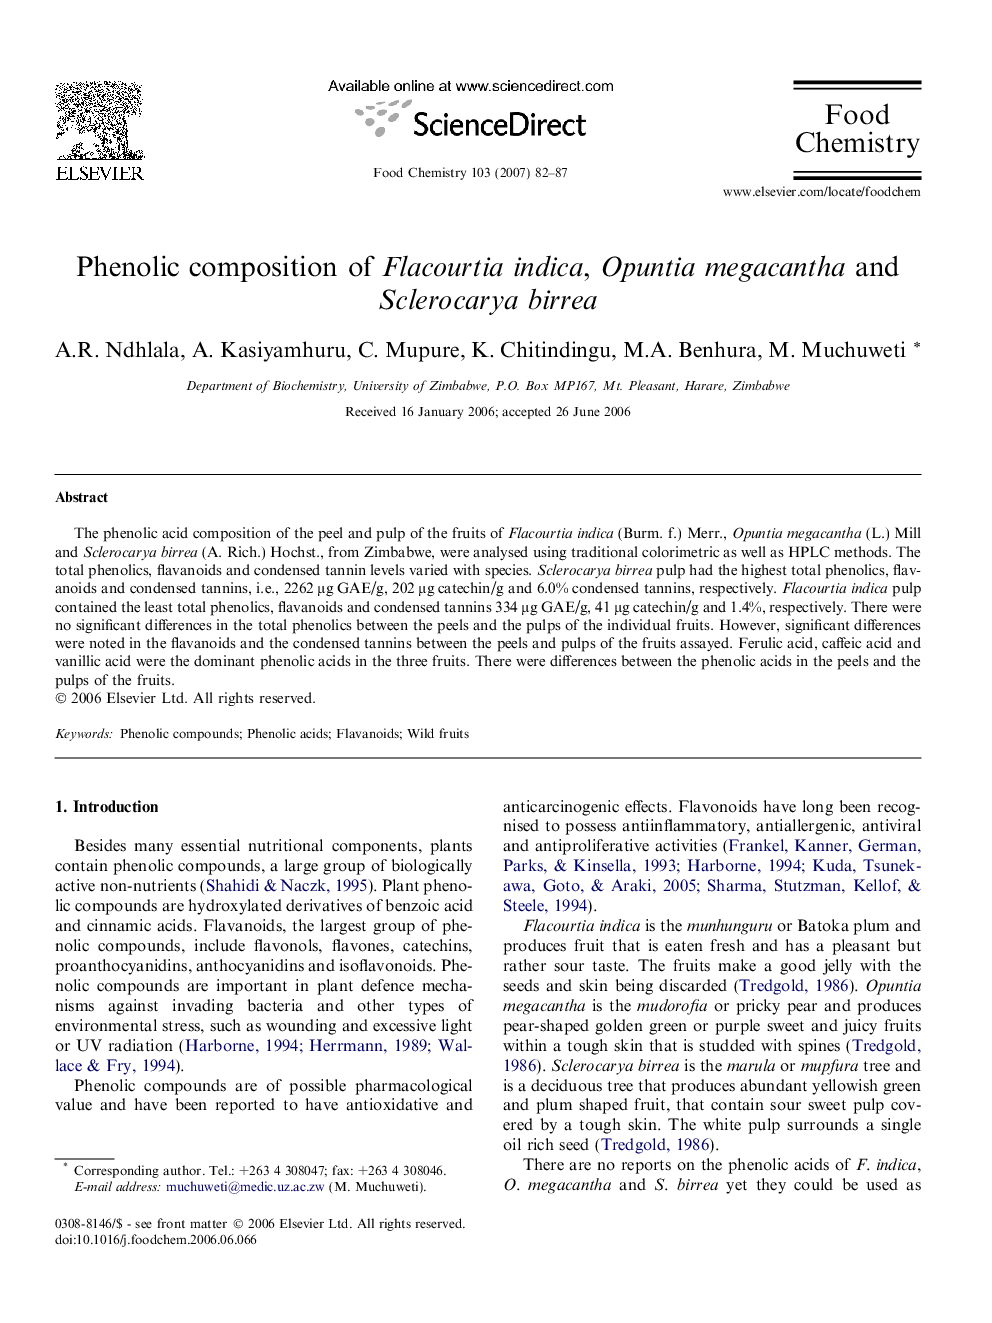 Phenolic composition of Flacourtia indica, Opuntia megacantha and Sclerocarya birrea